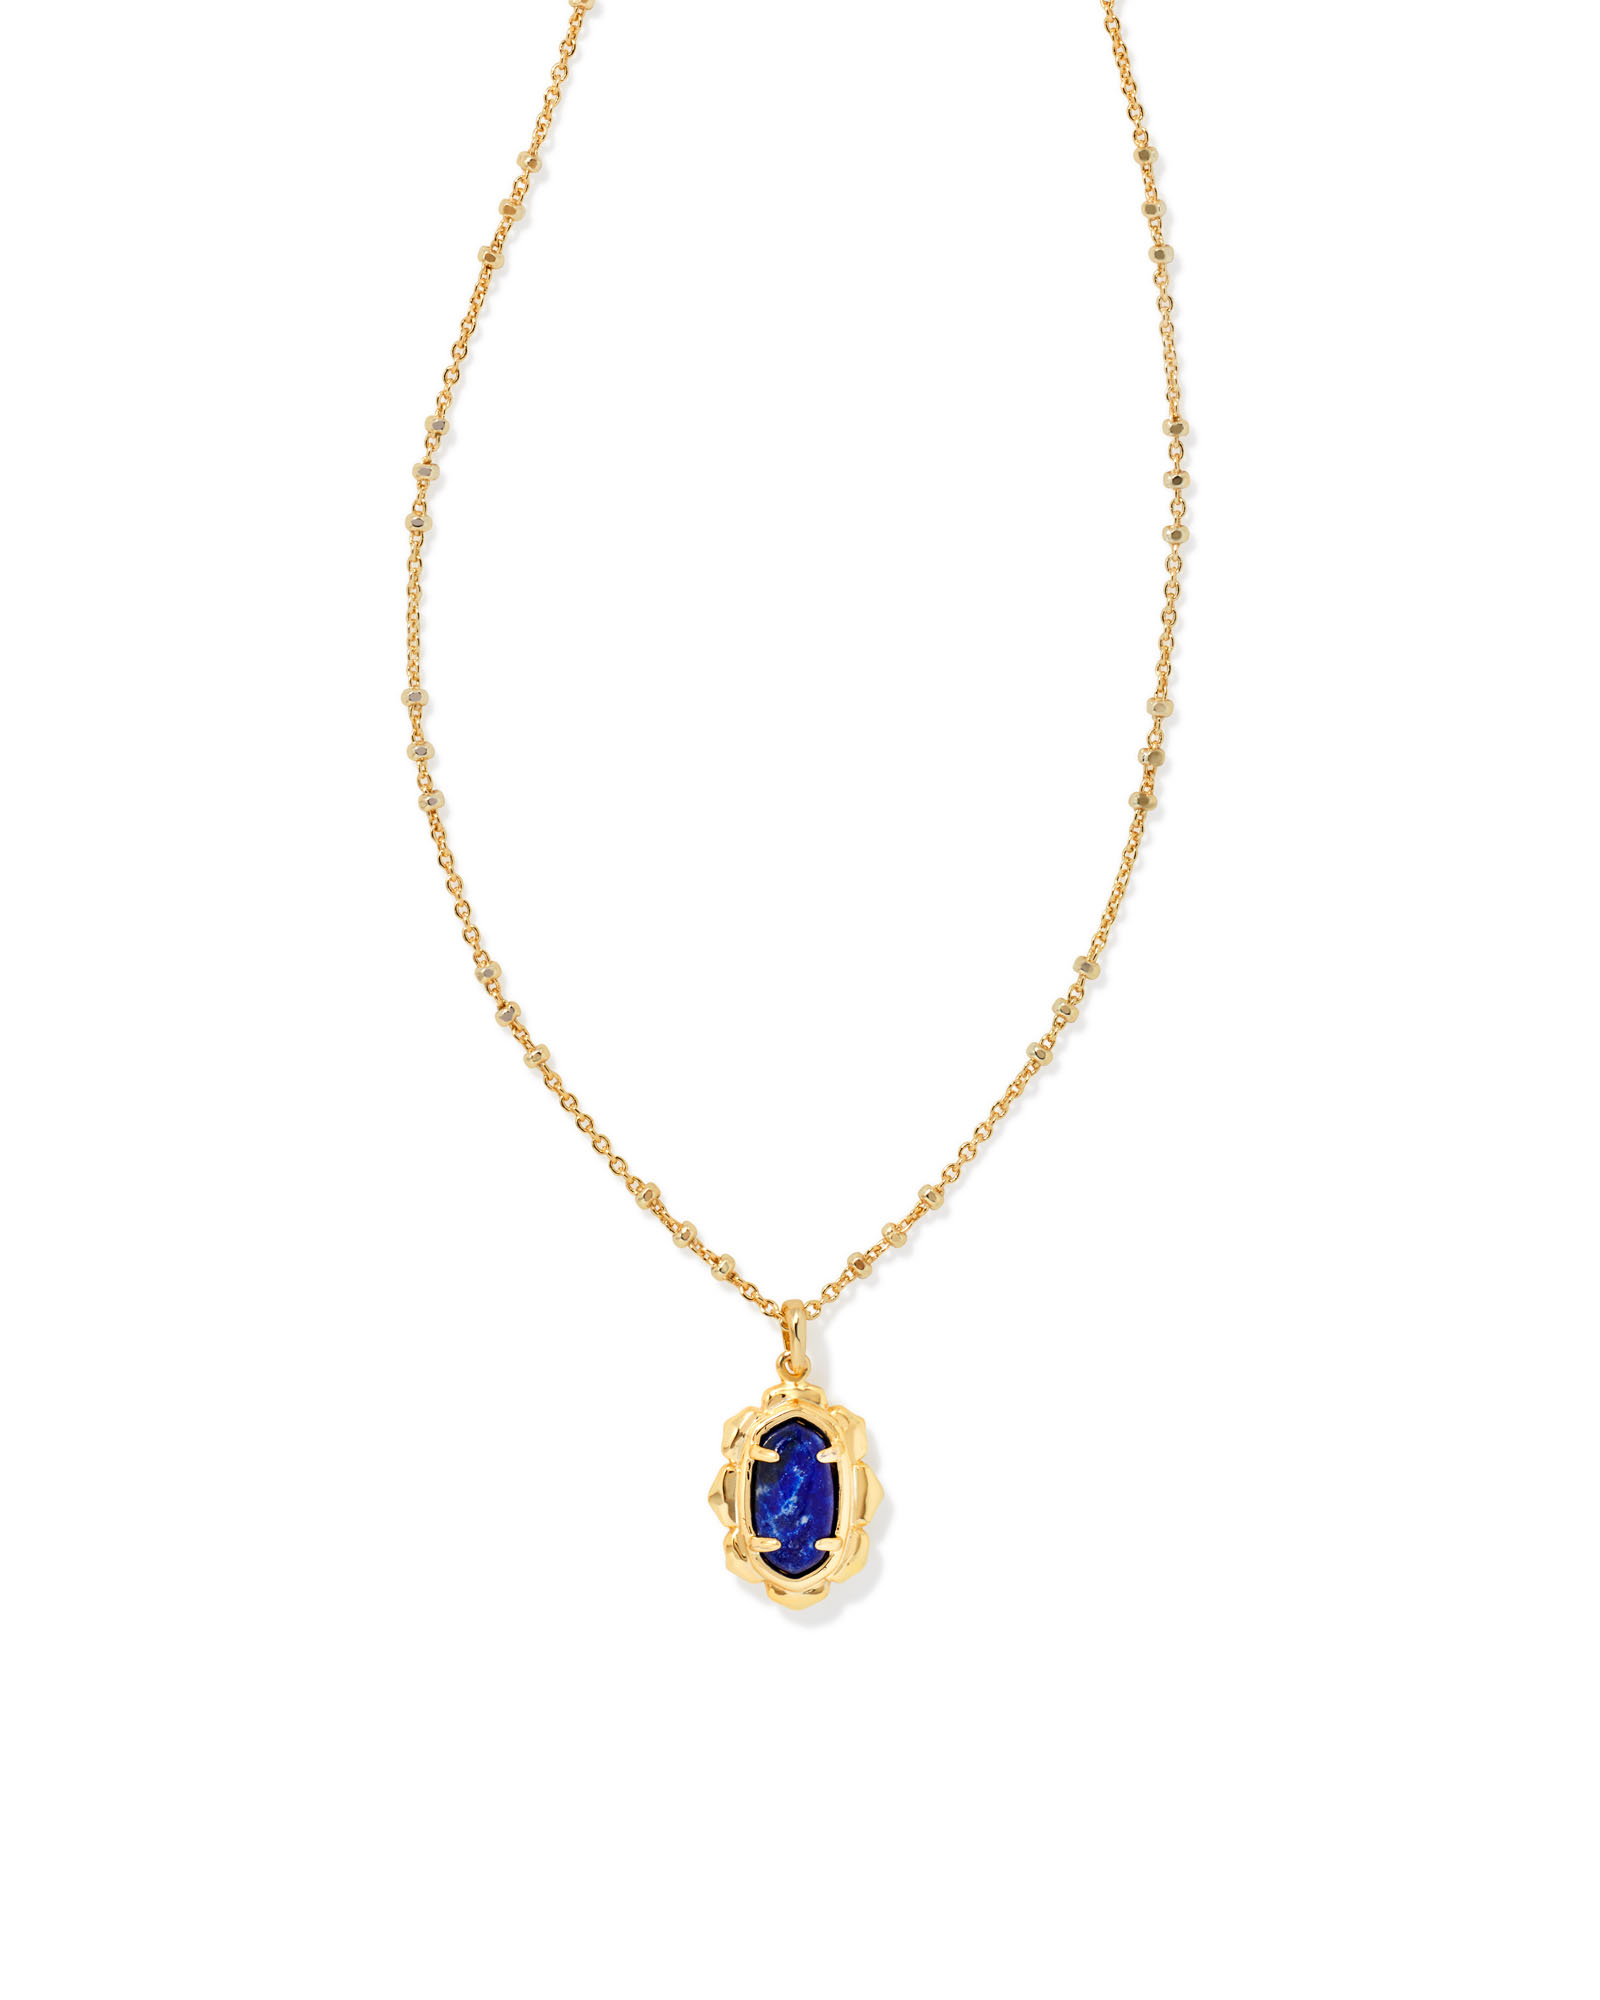 Piper Gold Pendant Necklace in Blue Lapis | Kendra Scott